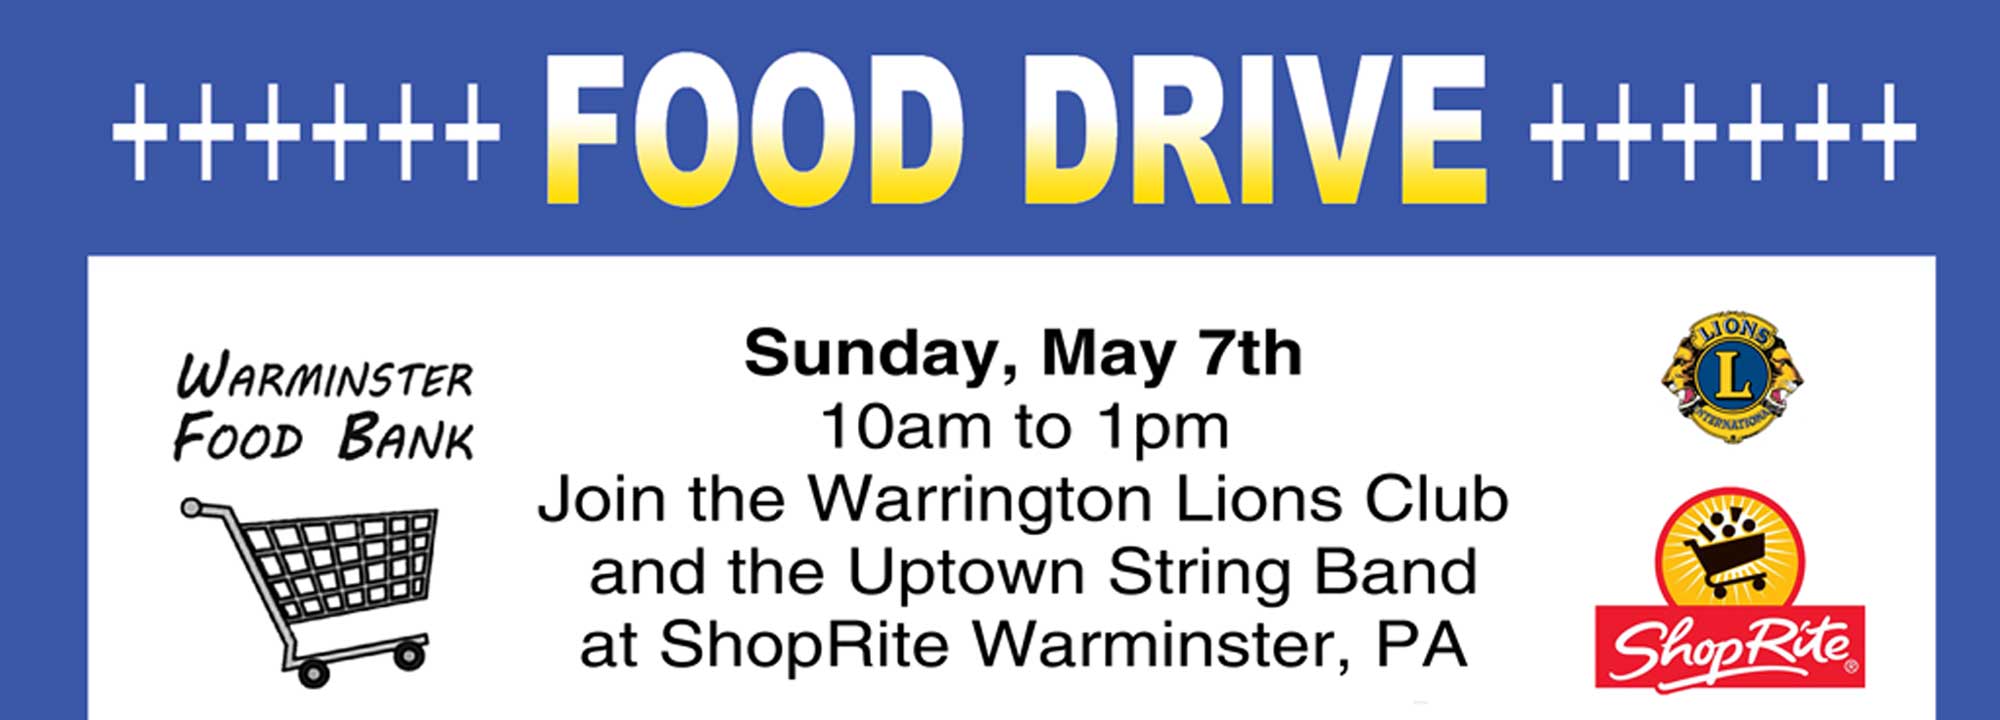  - Warminster Food Bank - Warminster PA - Food Drive - May 7th - Warminster Food Bank - Warminster PA - Food Drive - May 7th